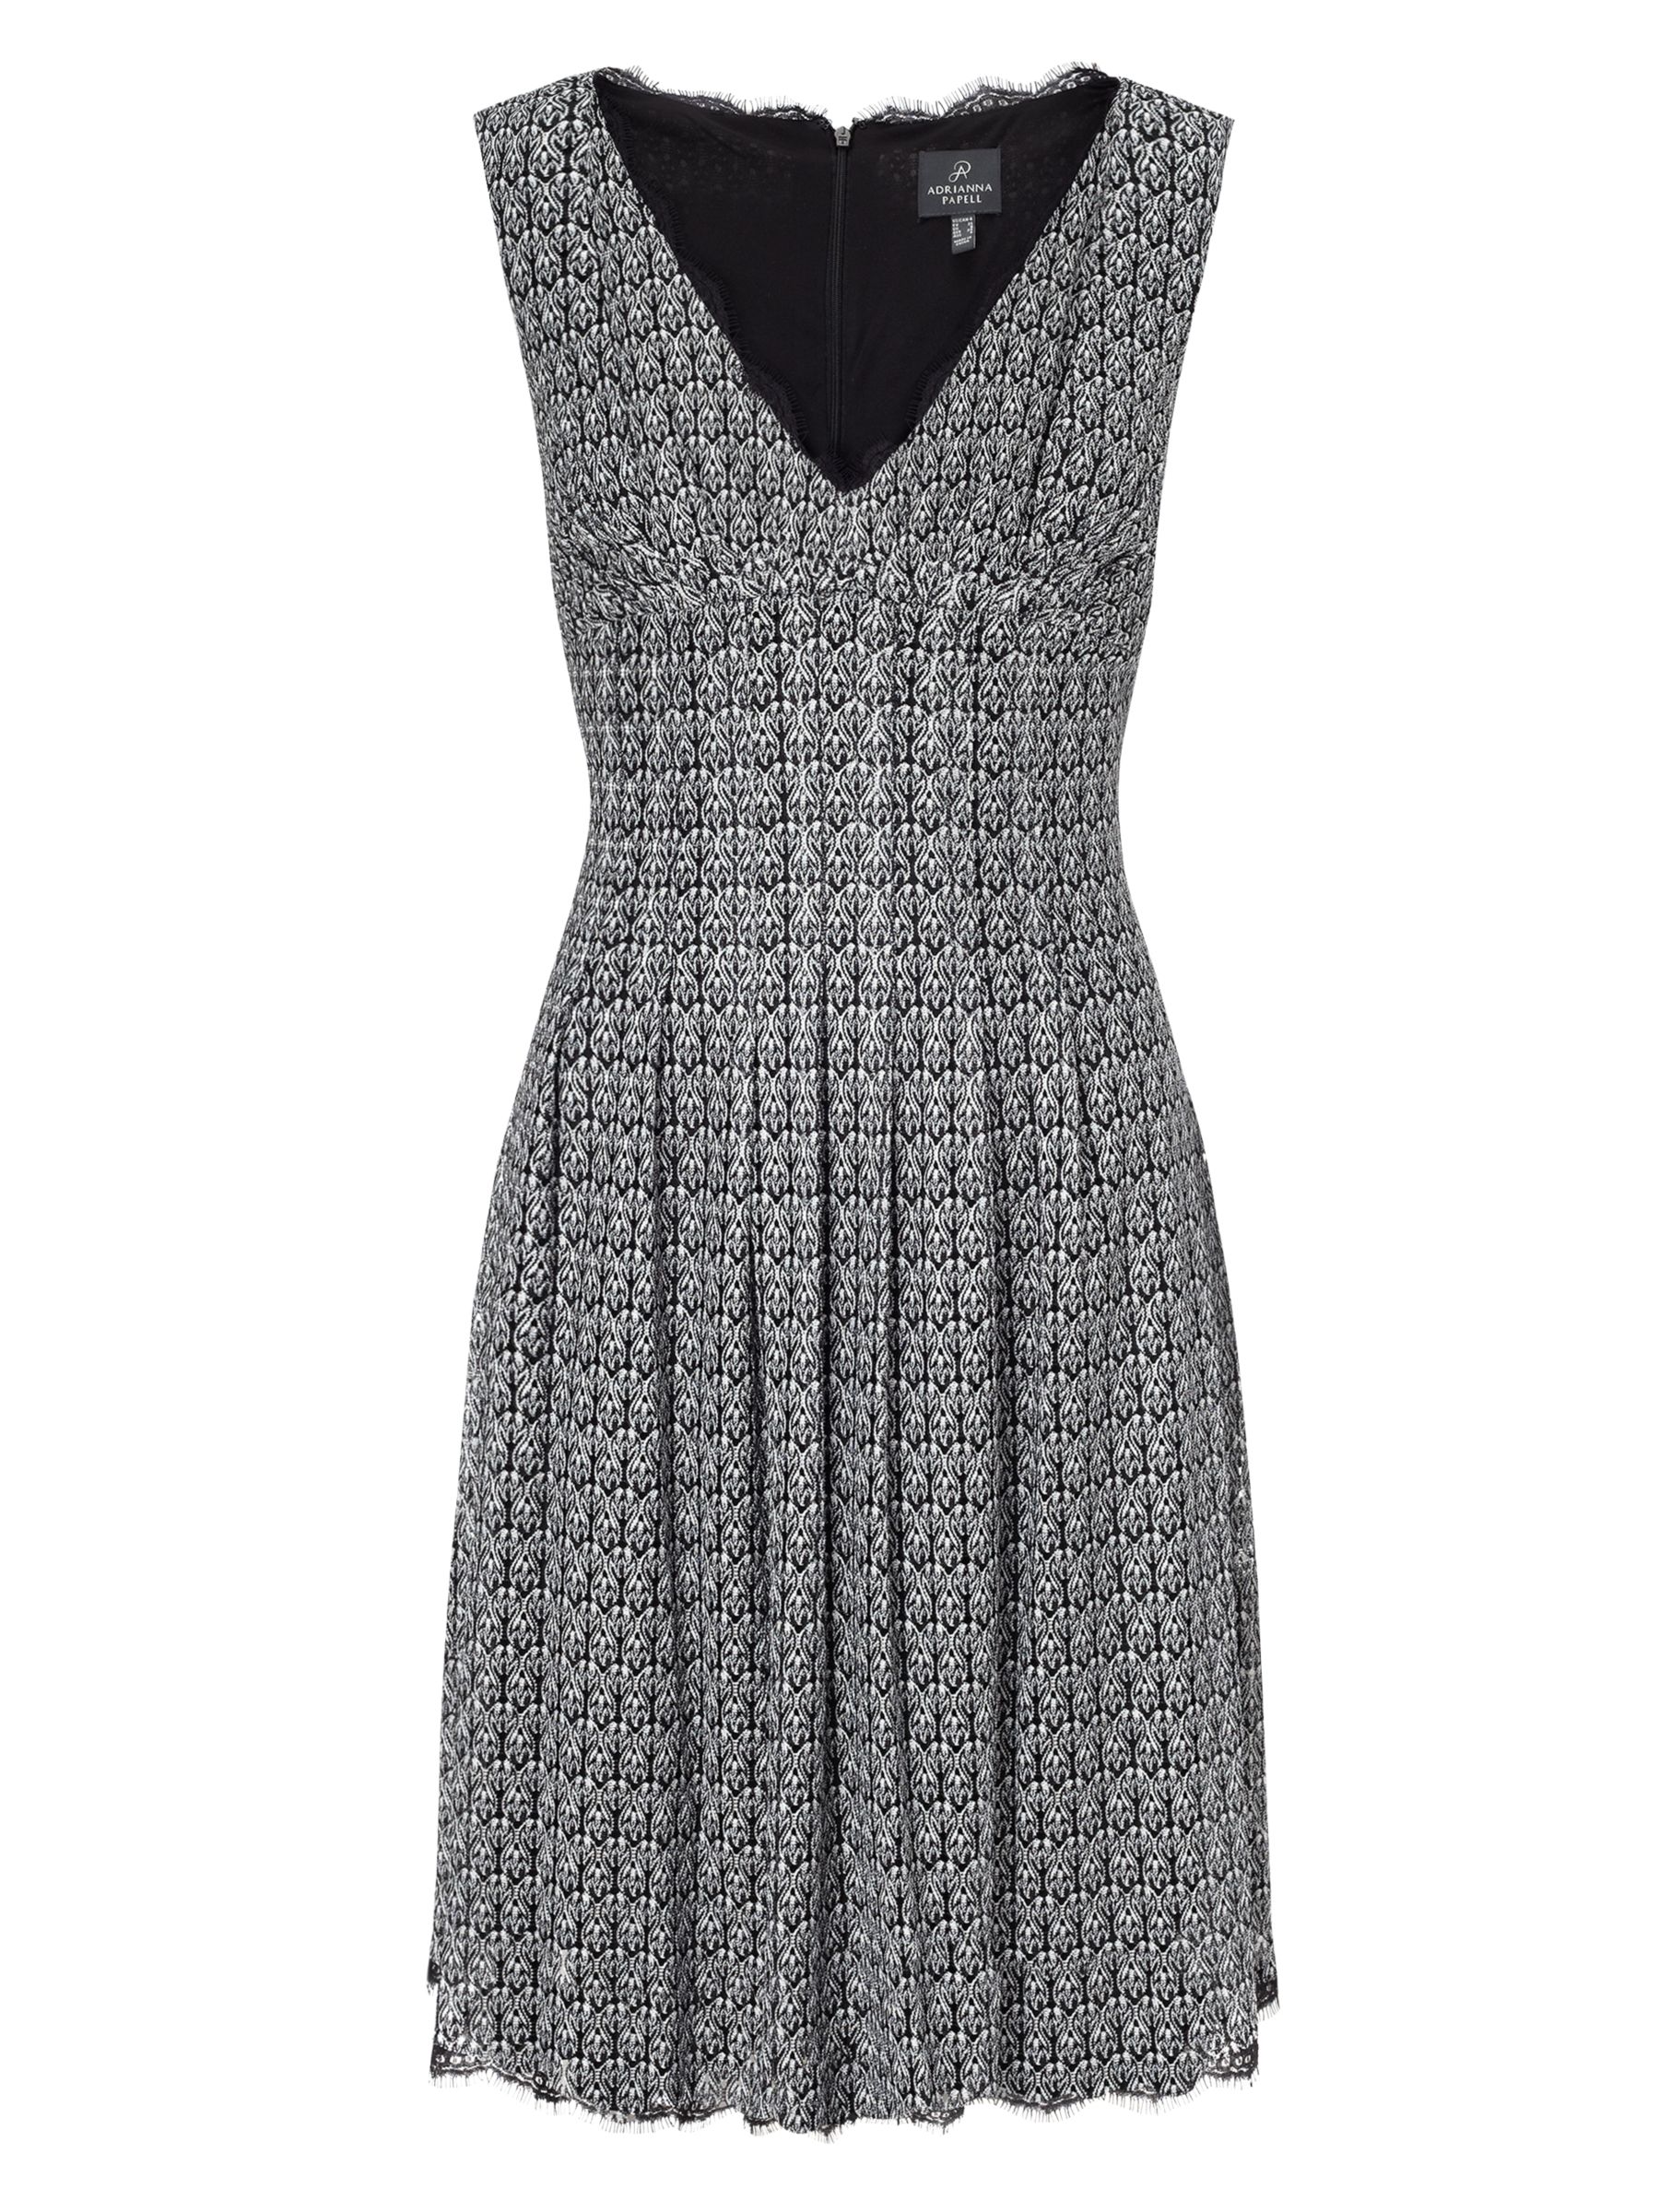 Adrianna Papell Deco Crochet Lace Flare Dress, Black/Ivory